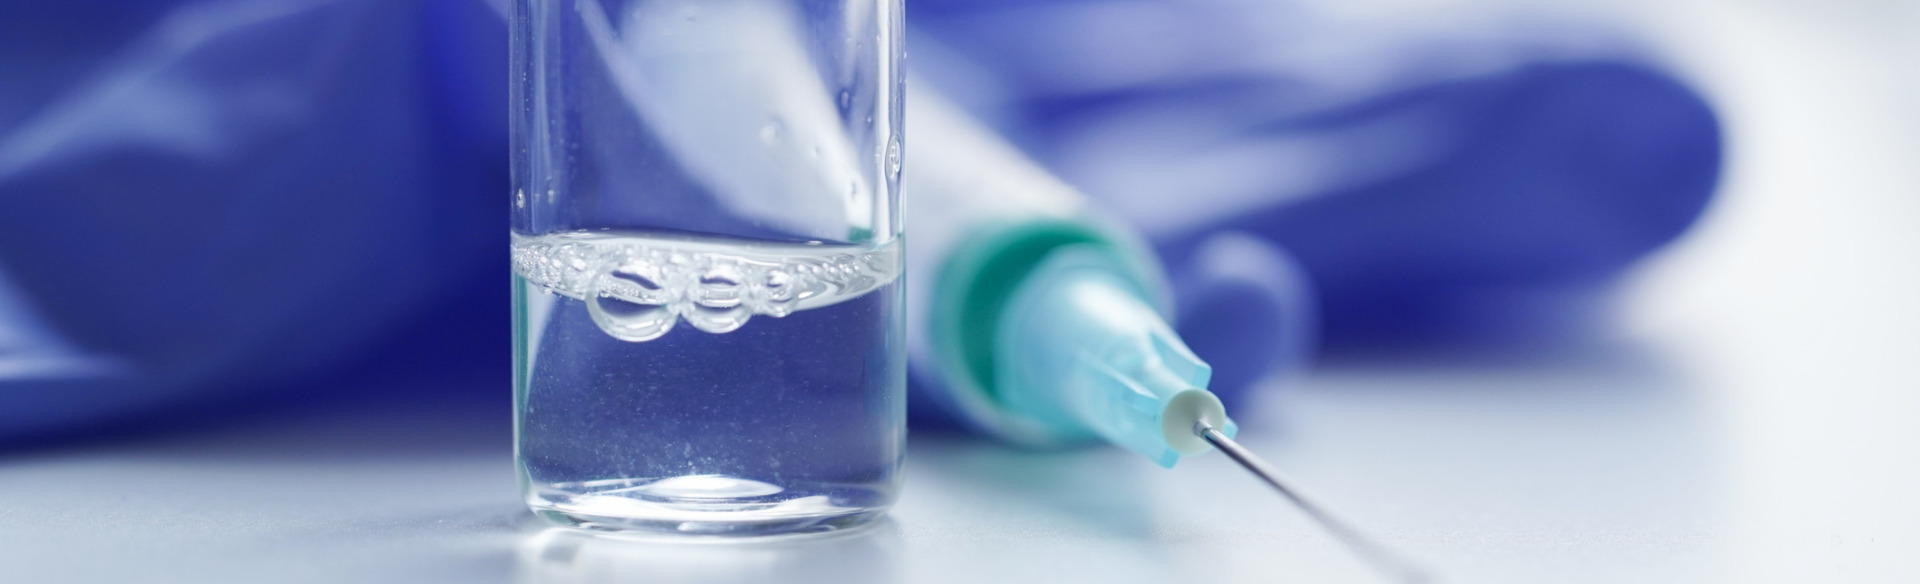 Prepared sterile compounded vaccinne